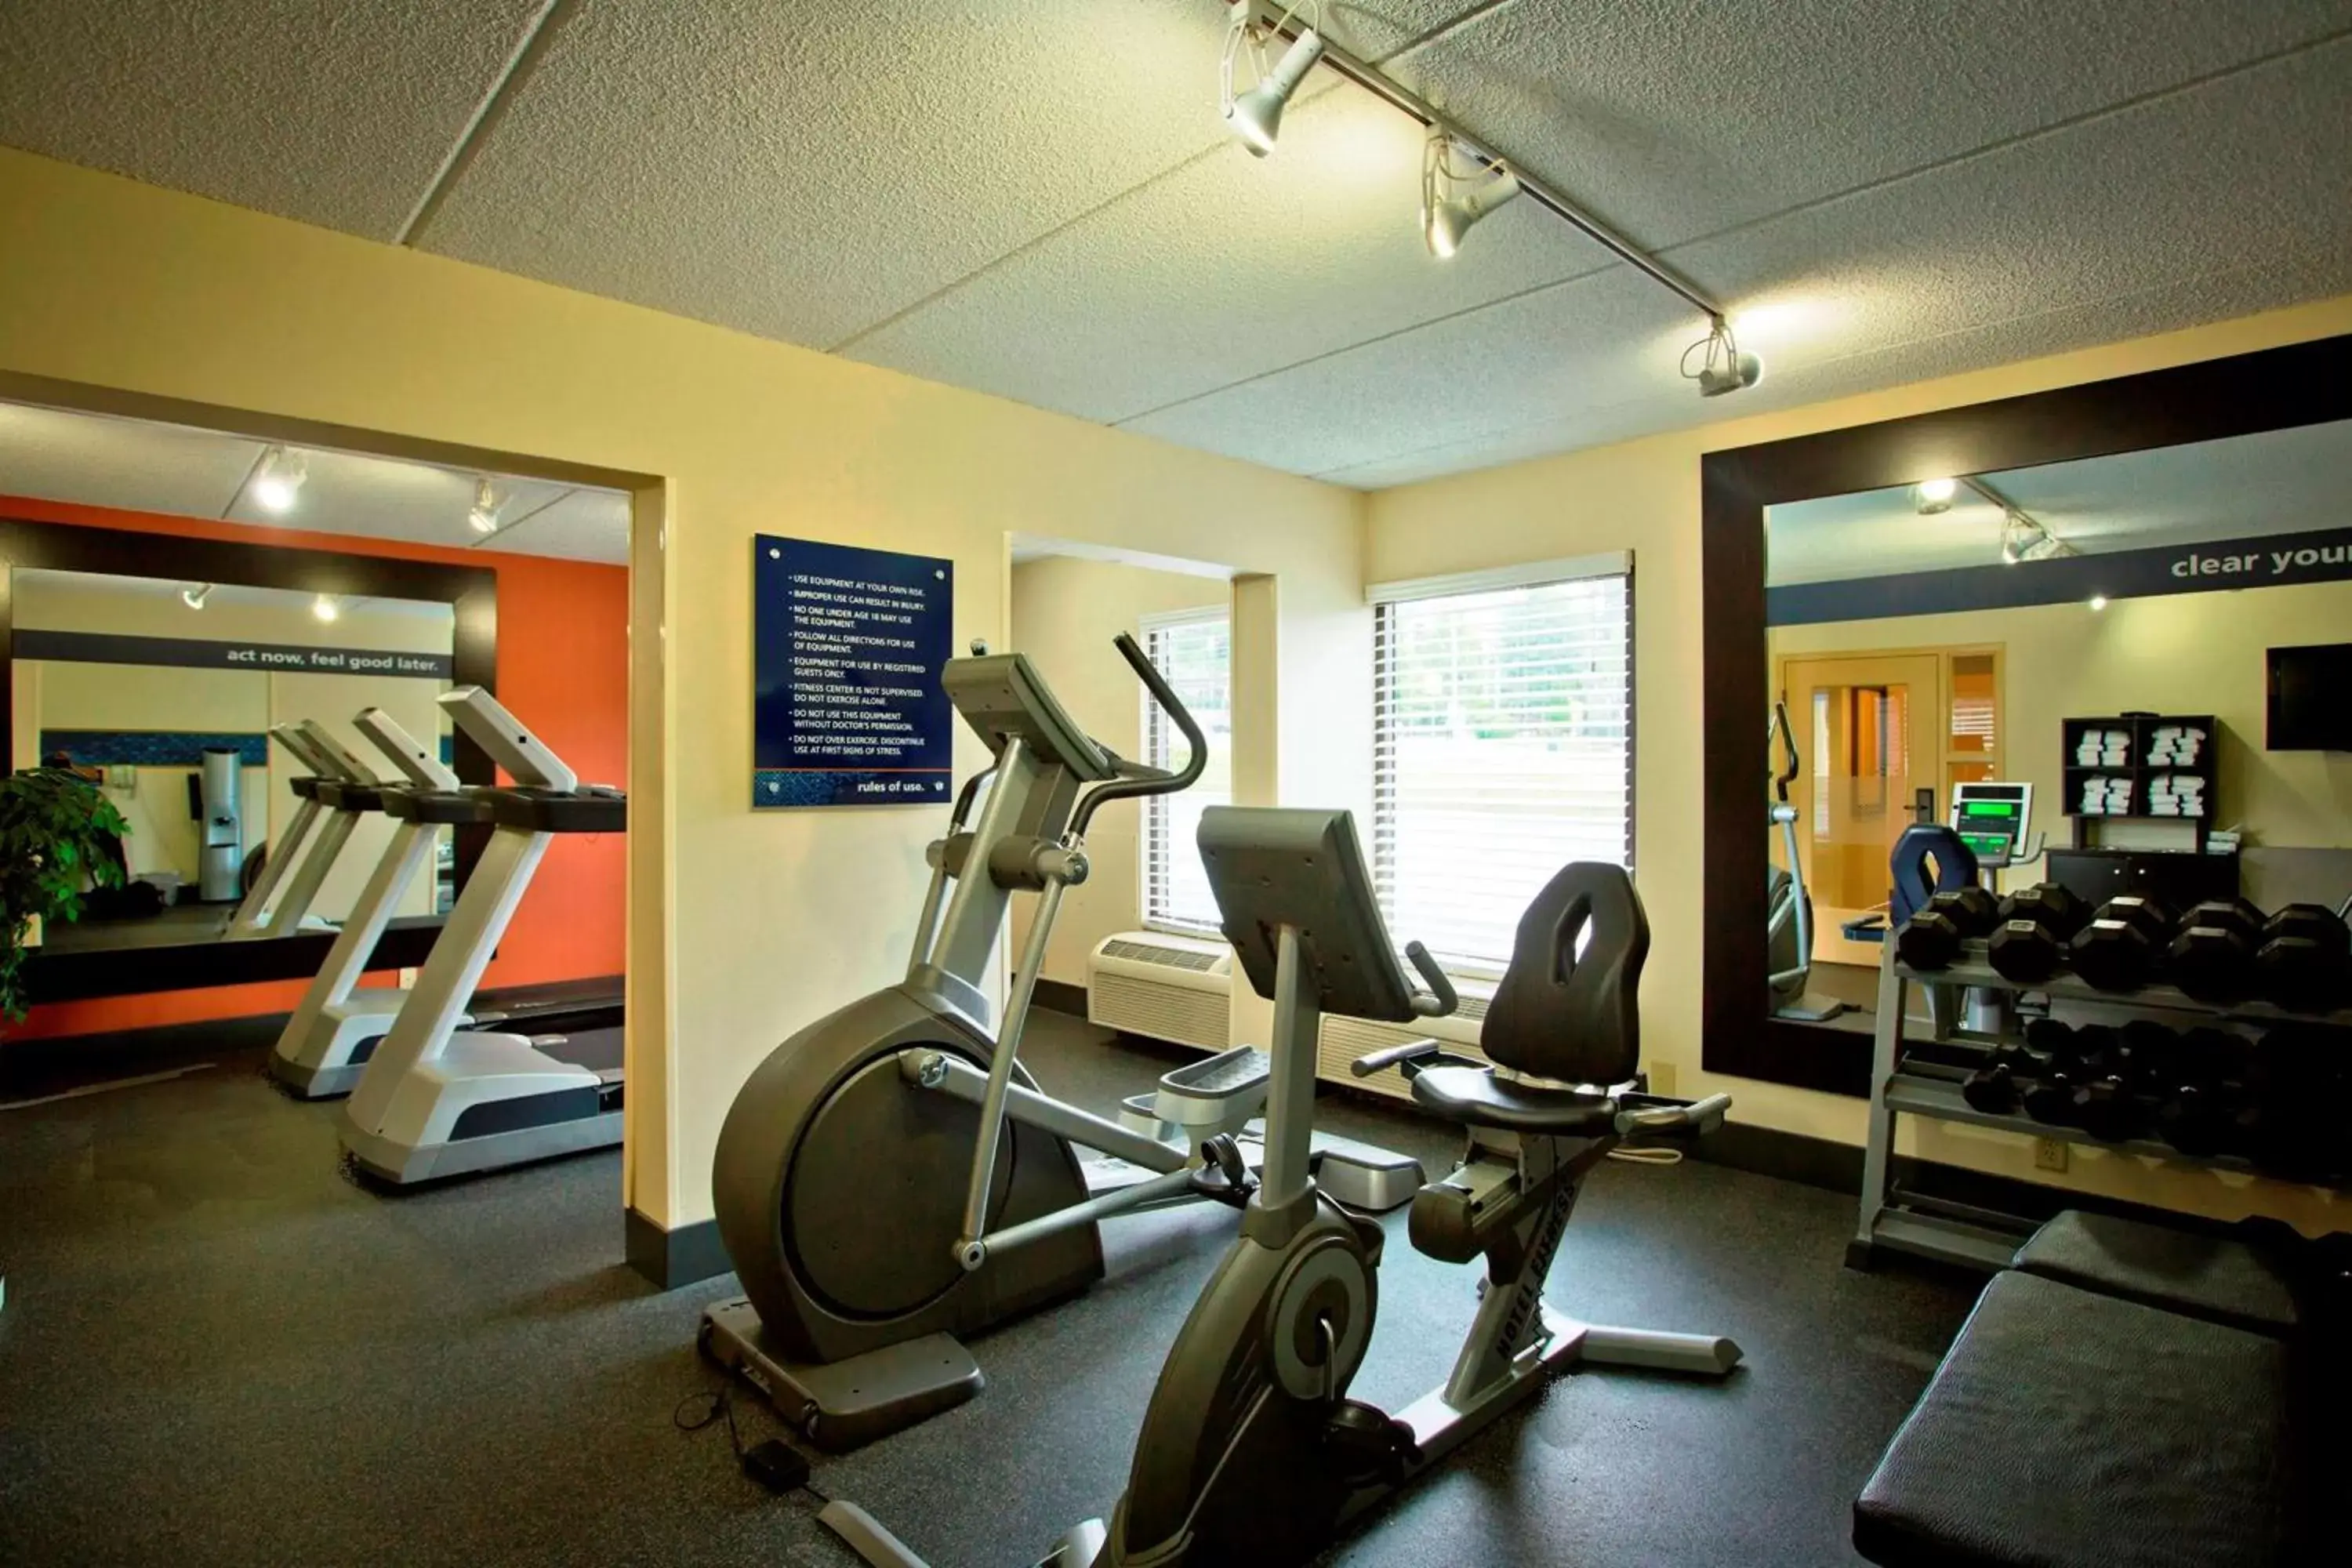 Fitness centre/facilities, Fitness Center/Facilities in Hampton Inn Atlanta-Northlake